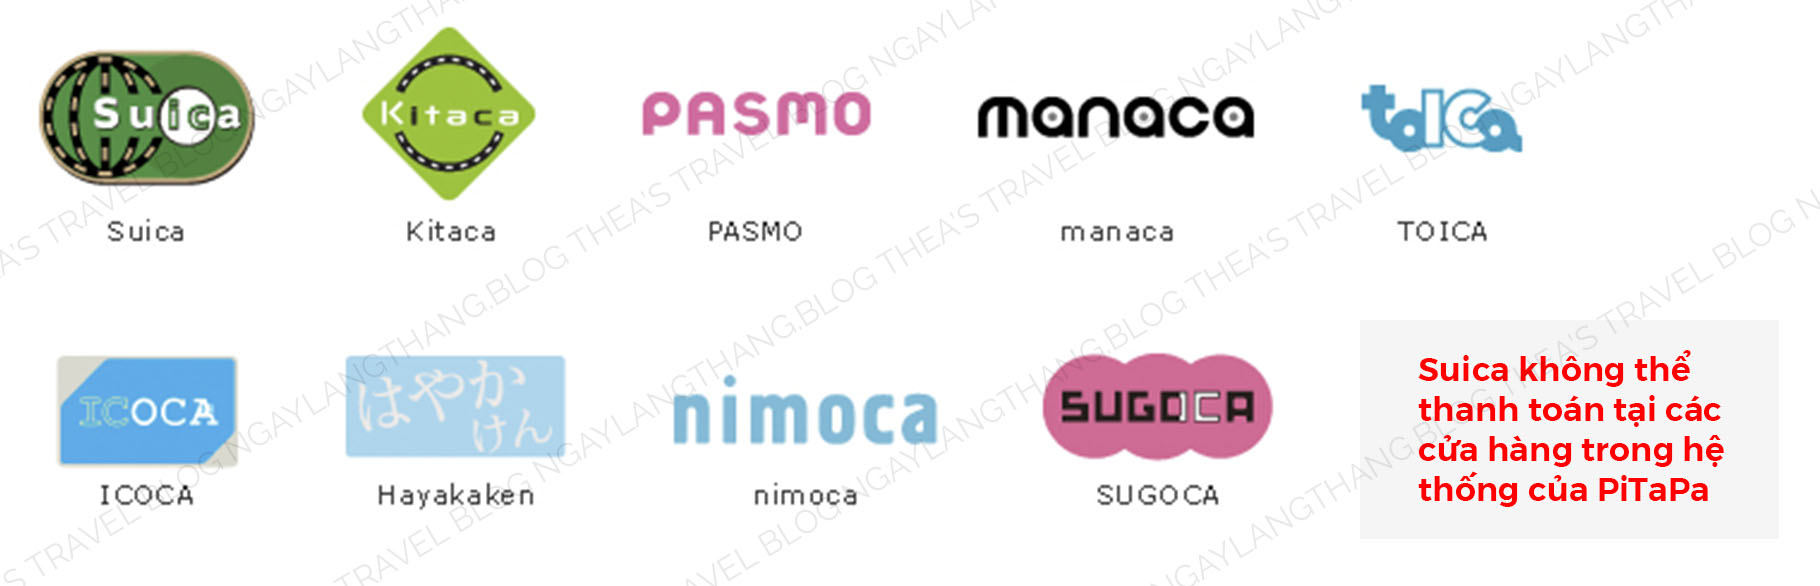 Pasmo Suica Icoca-logo